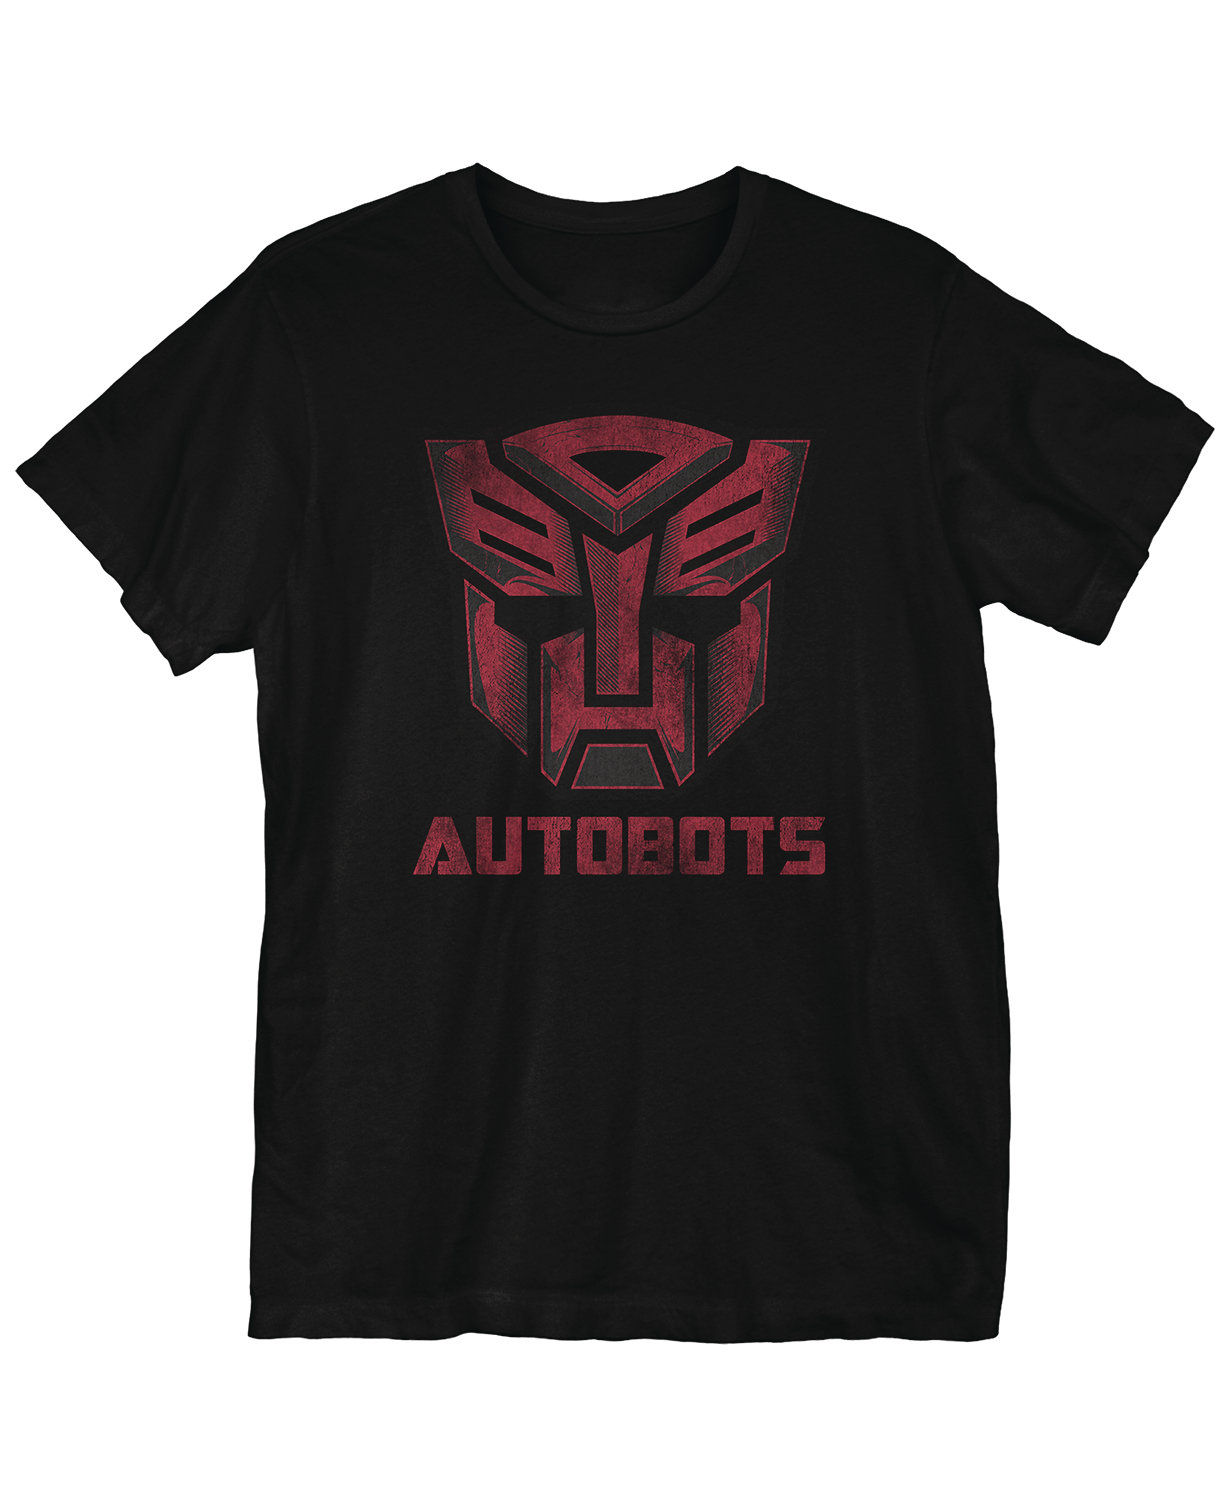 Transformers Bots Meets The Eye T-Shirt Medium